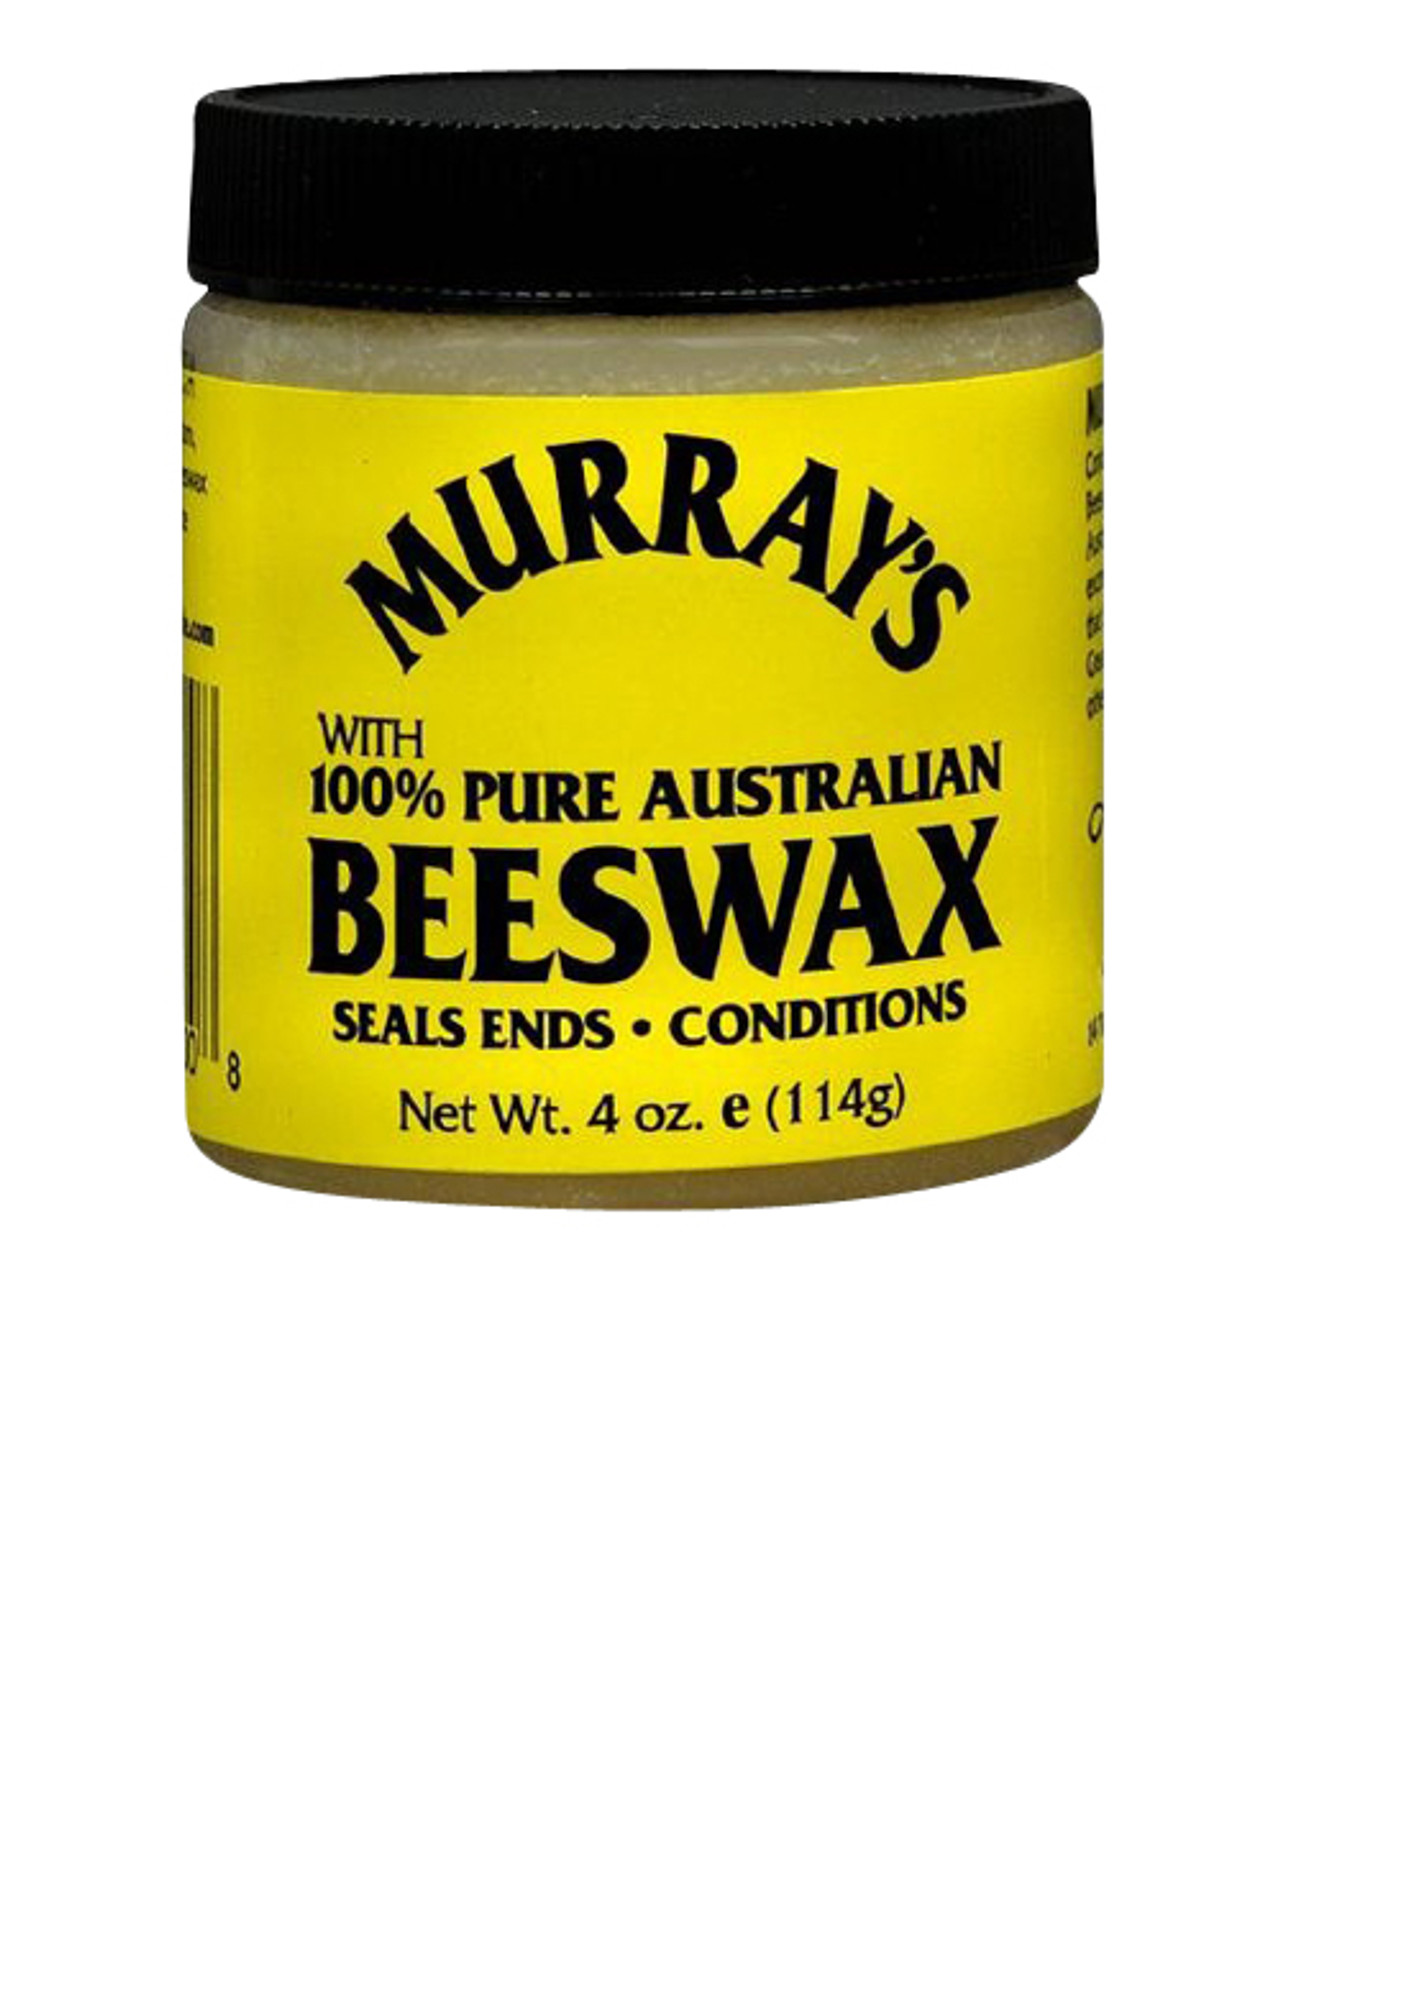 Murray's 100% Pure Australian Bees Wax, 4 oz